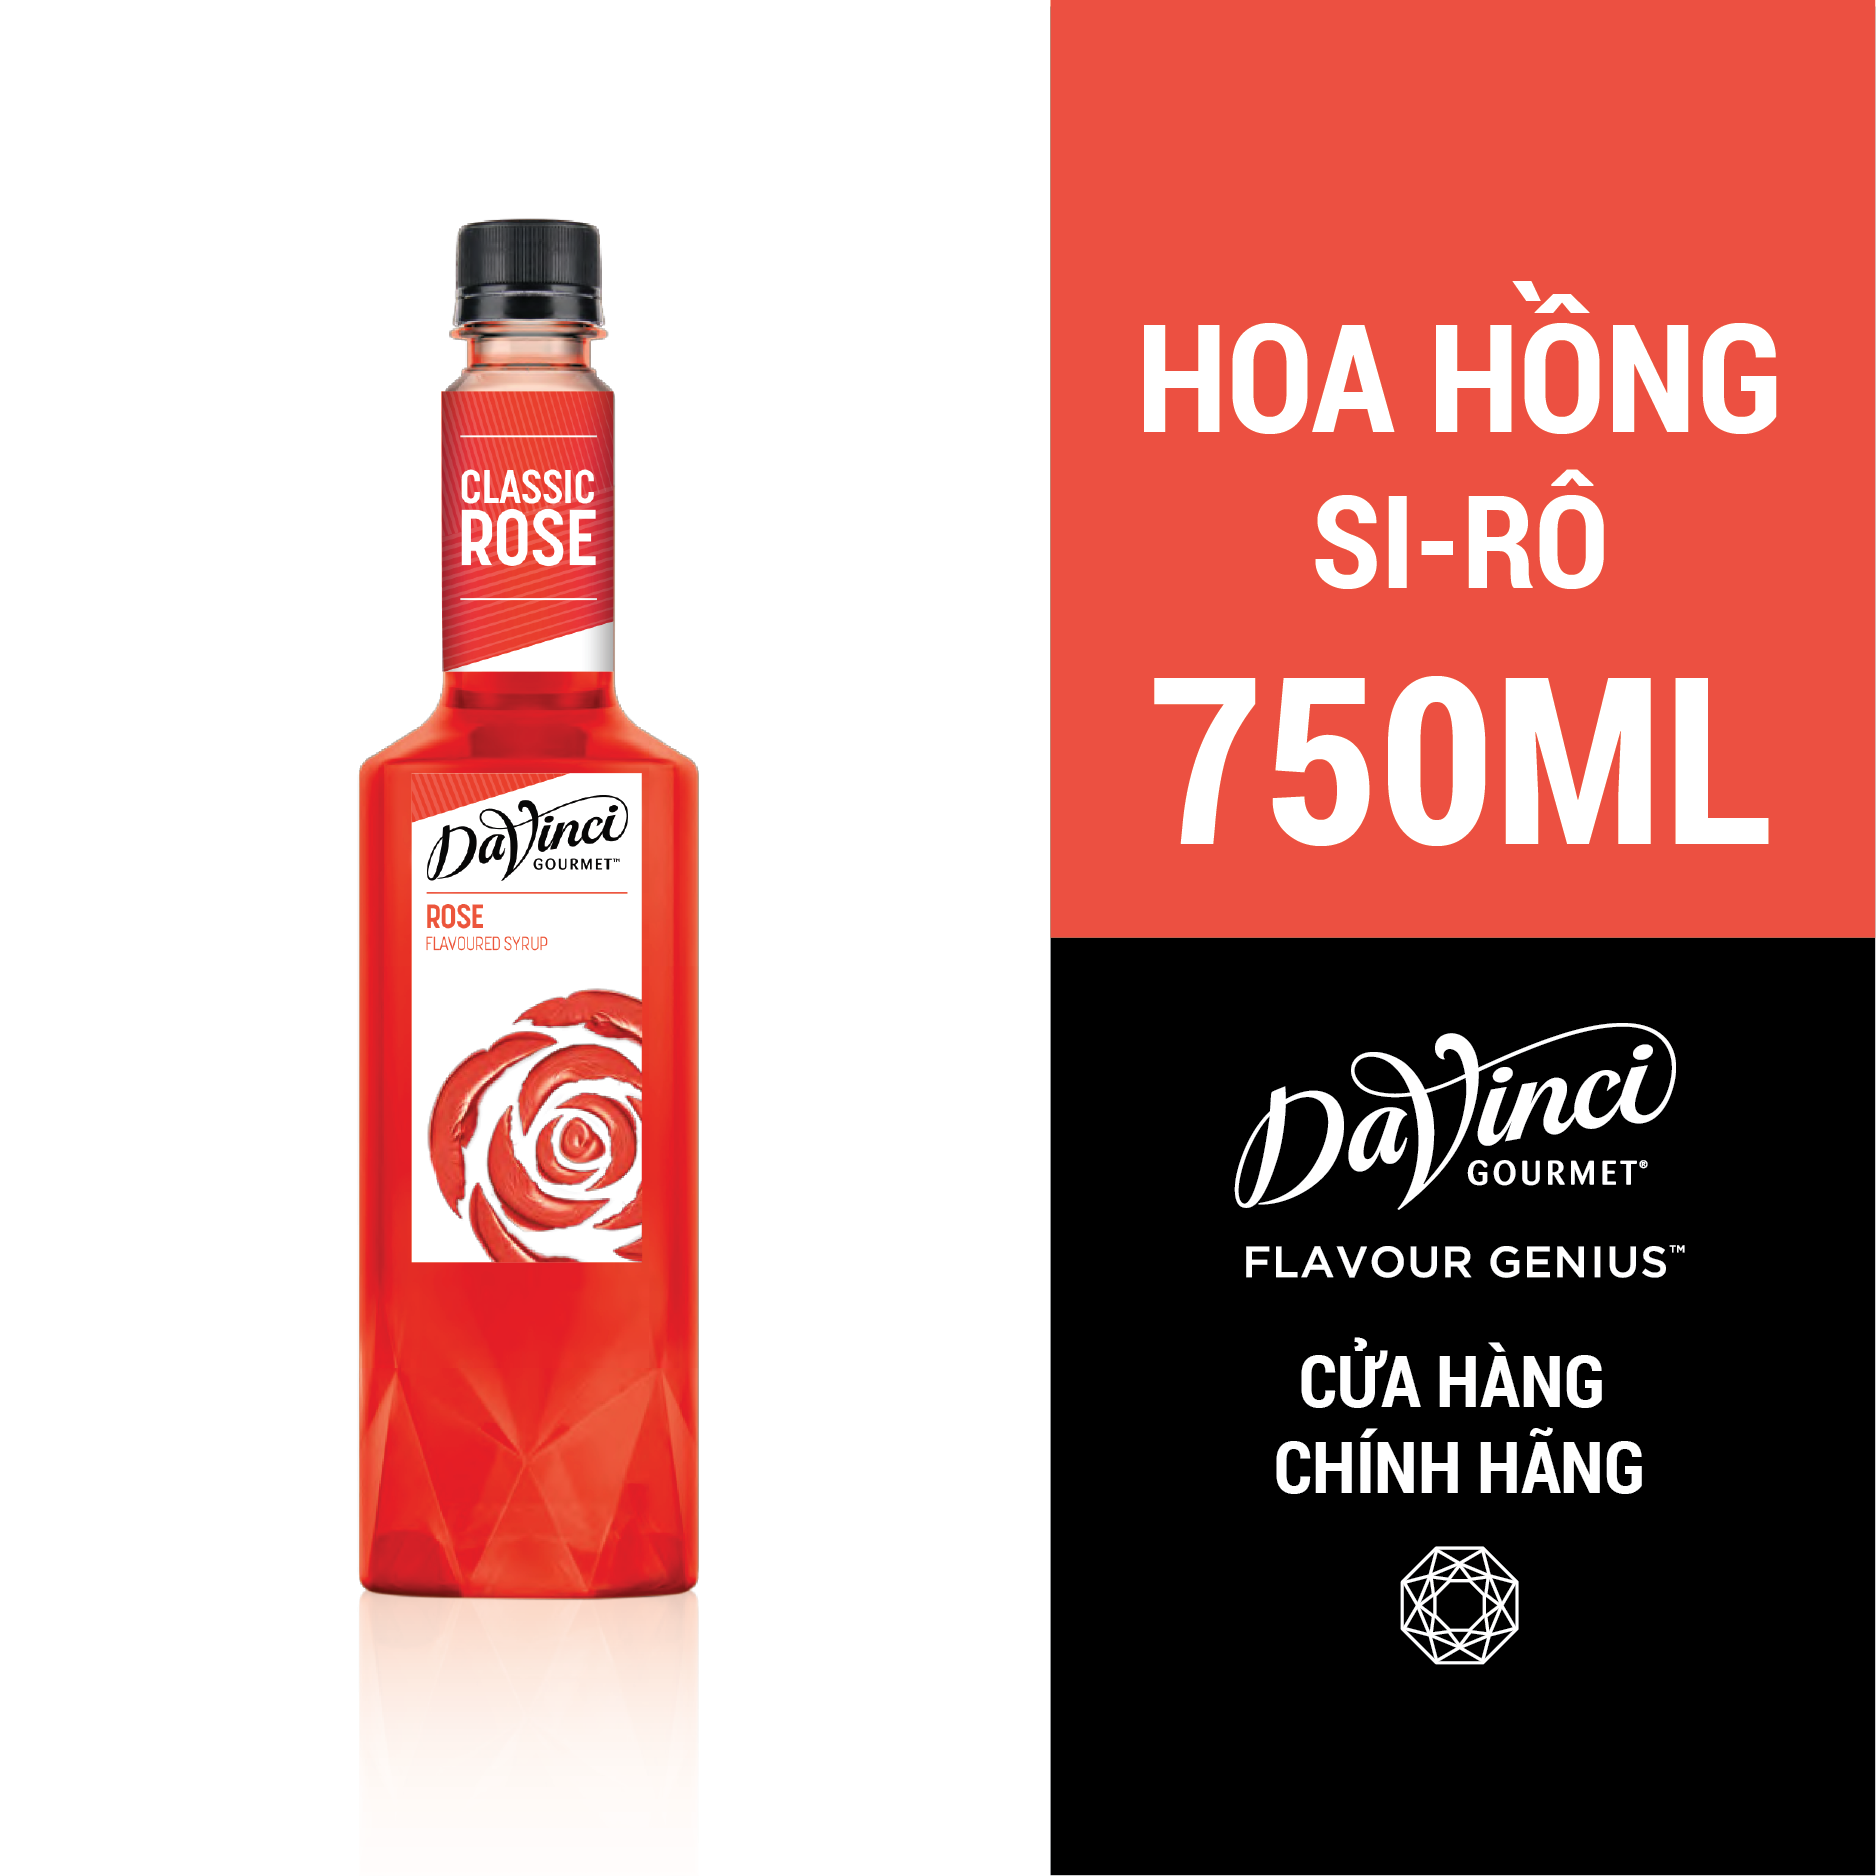 Siro Hoa Hồng Rose Syrup - DaVinci Gourmet 750ml